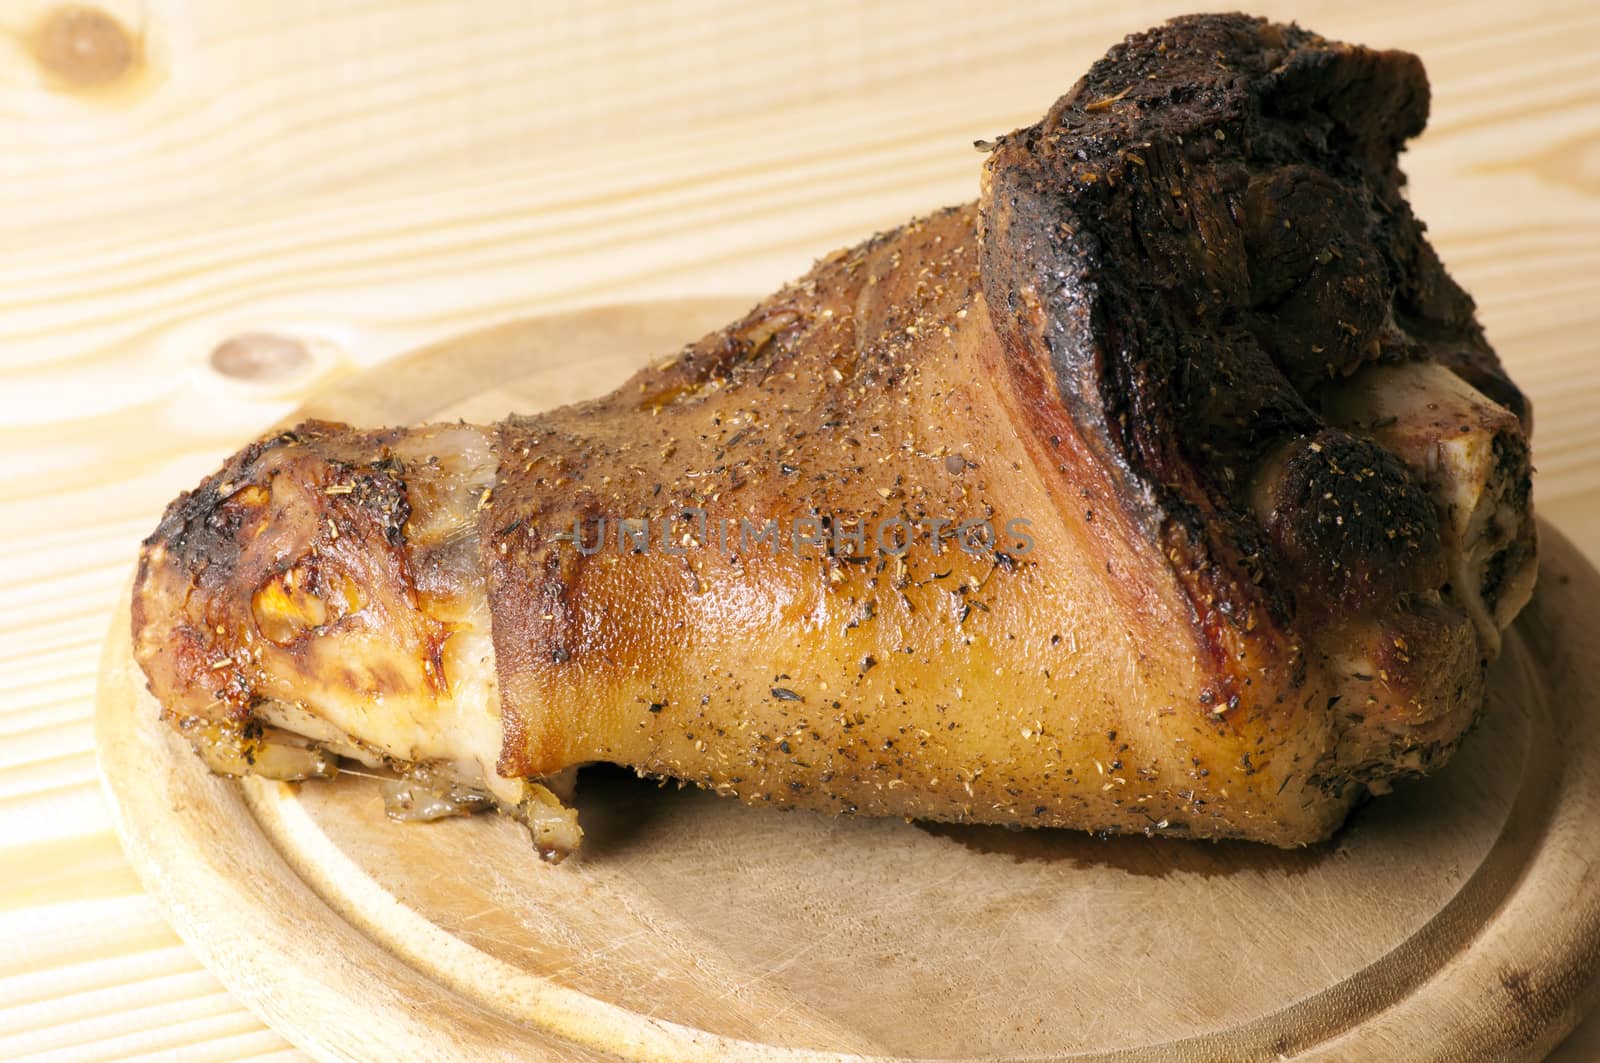 Roasted pork leg served on cutting board